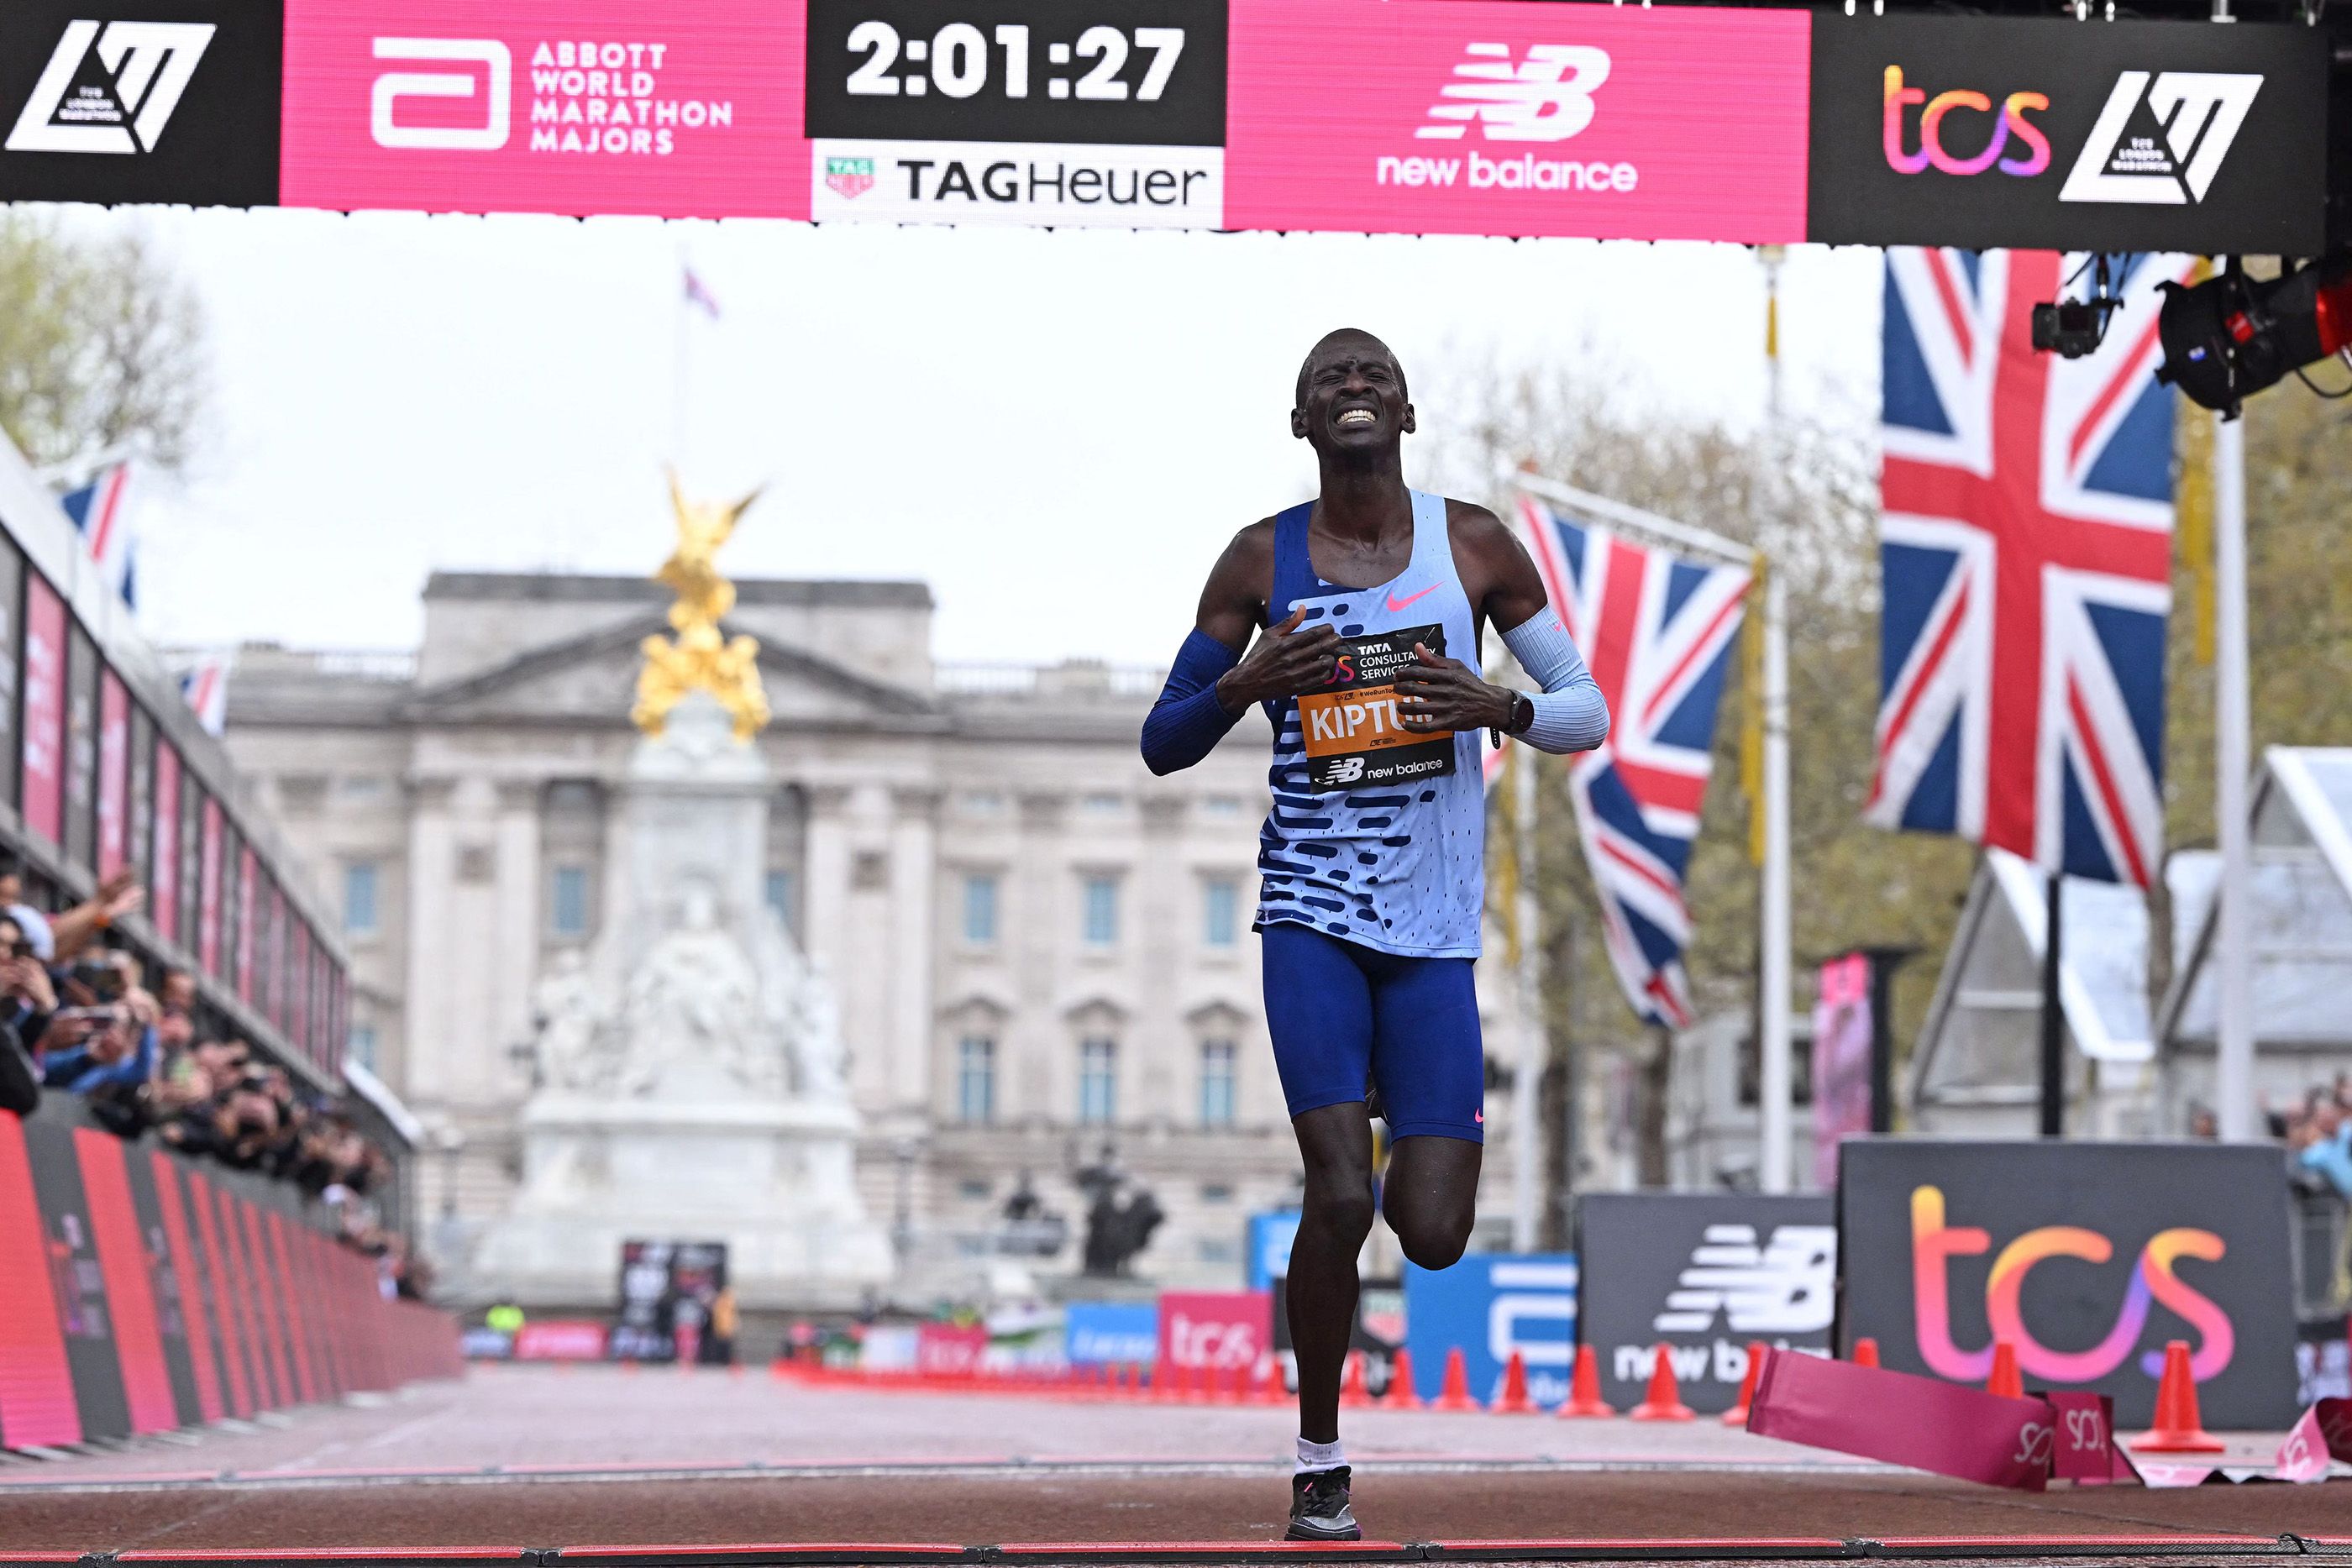 Kelvin Kiptum reacts after winning the London Marathon in 2:01:25